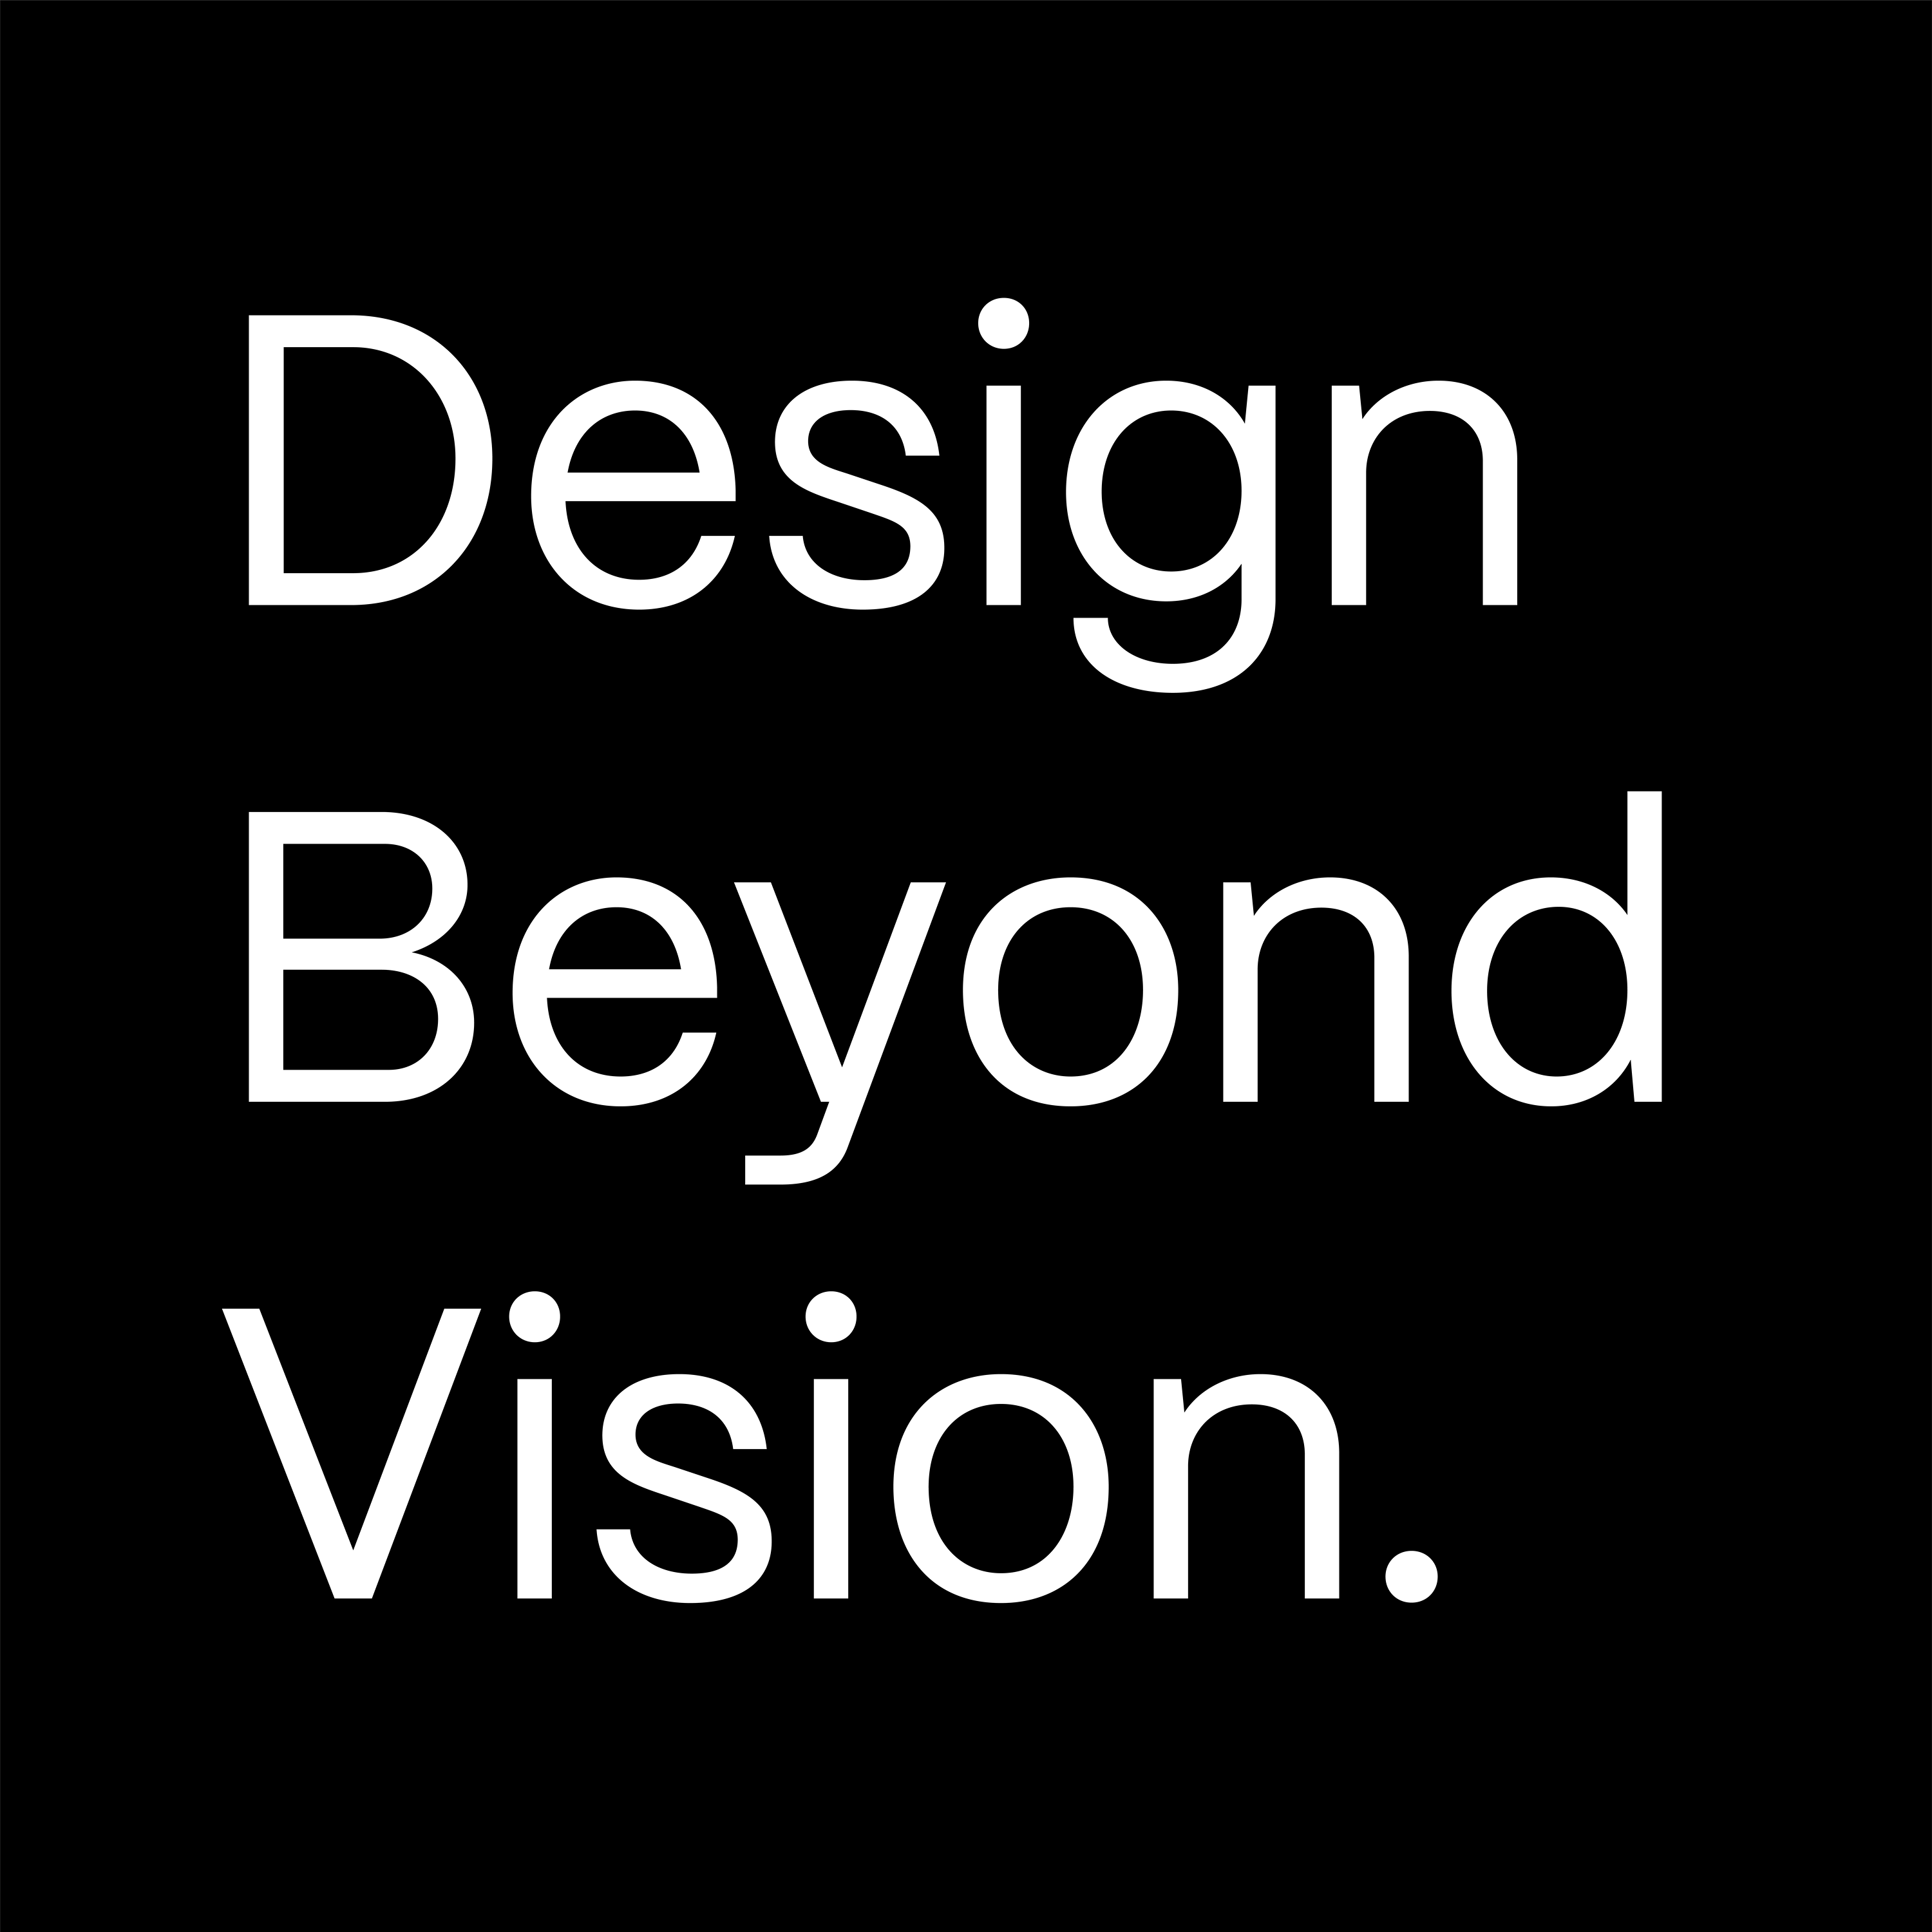 Design Beyond Vision Podcast by Minimal Rhythm